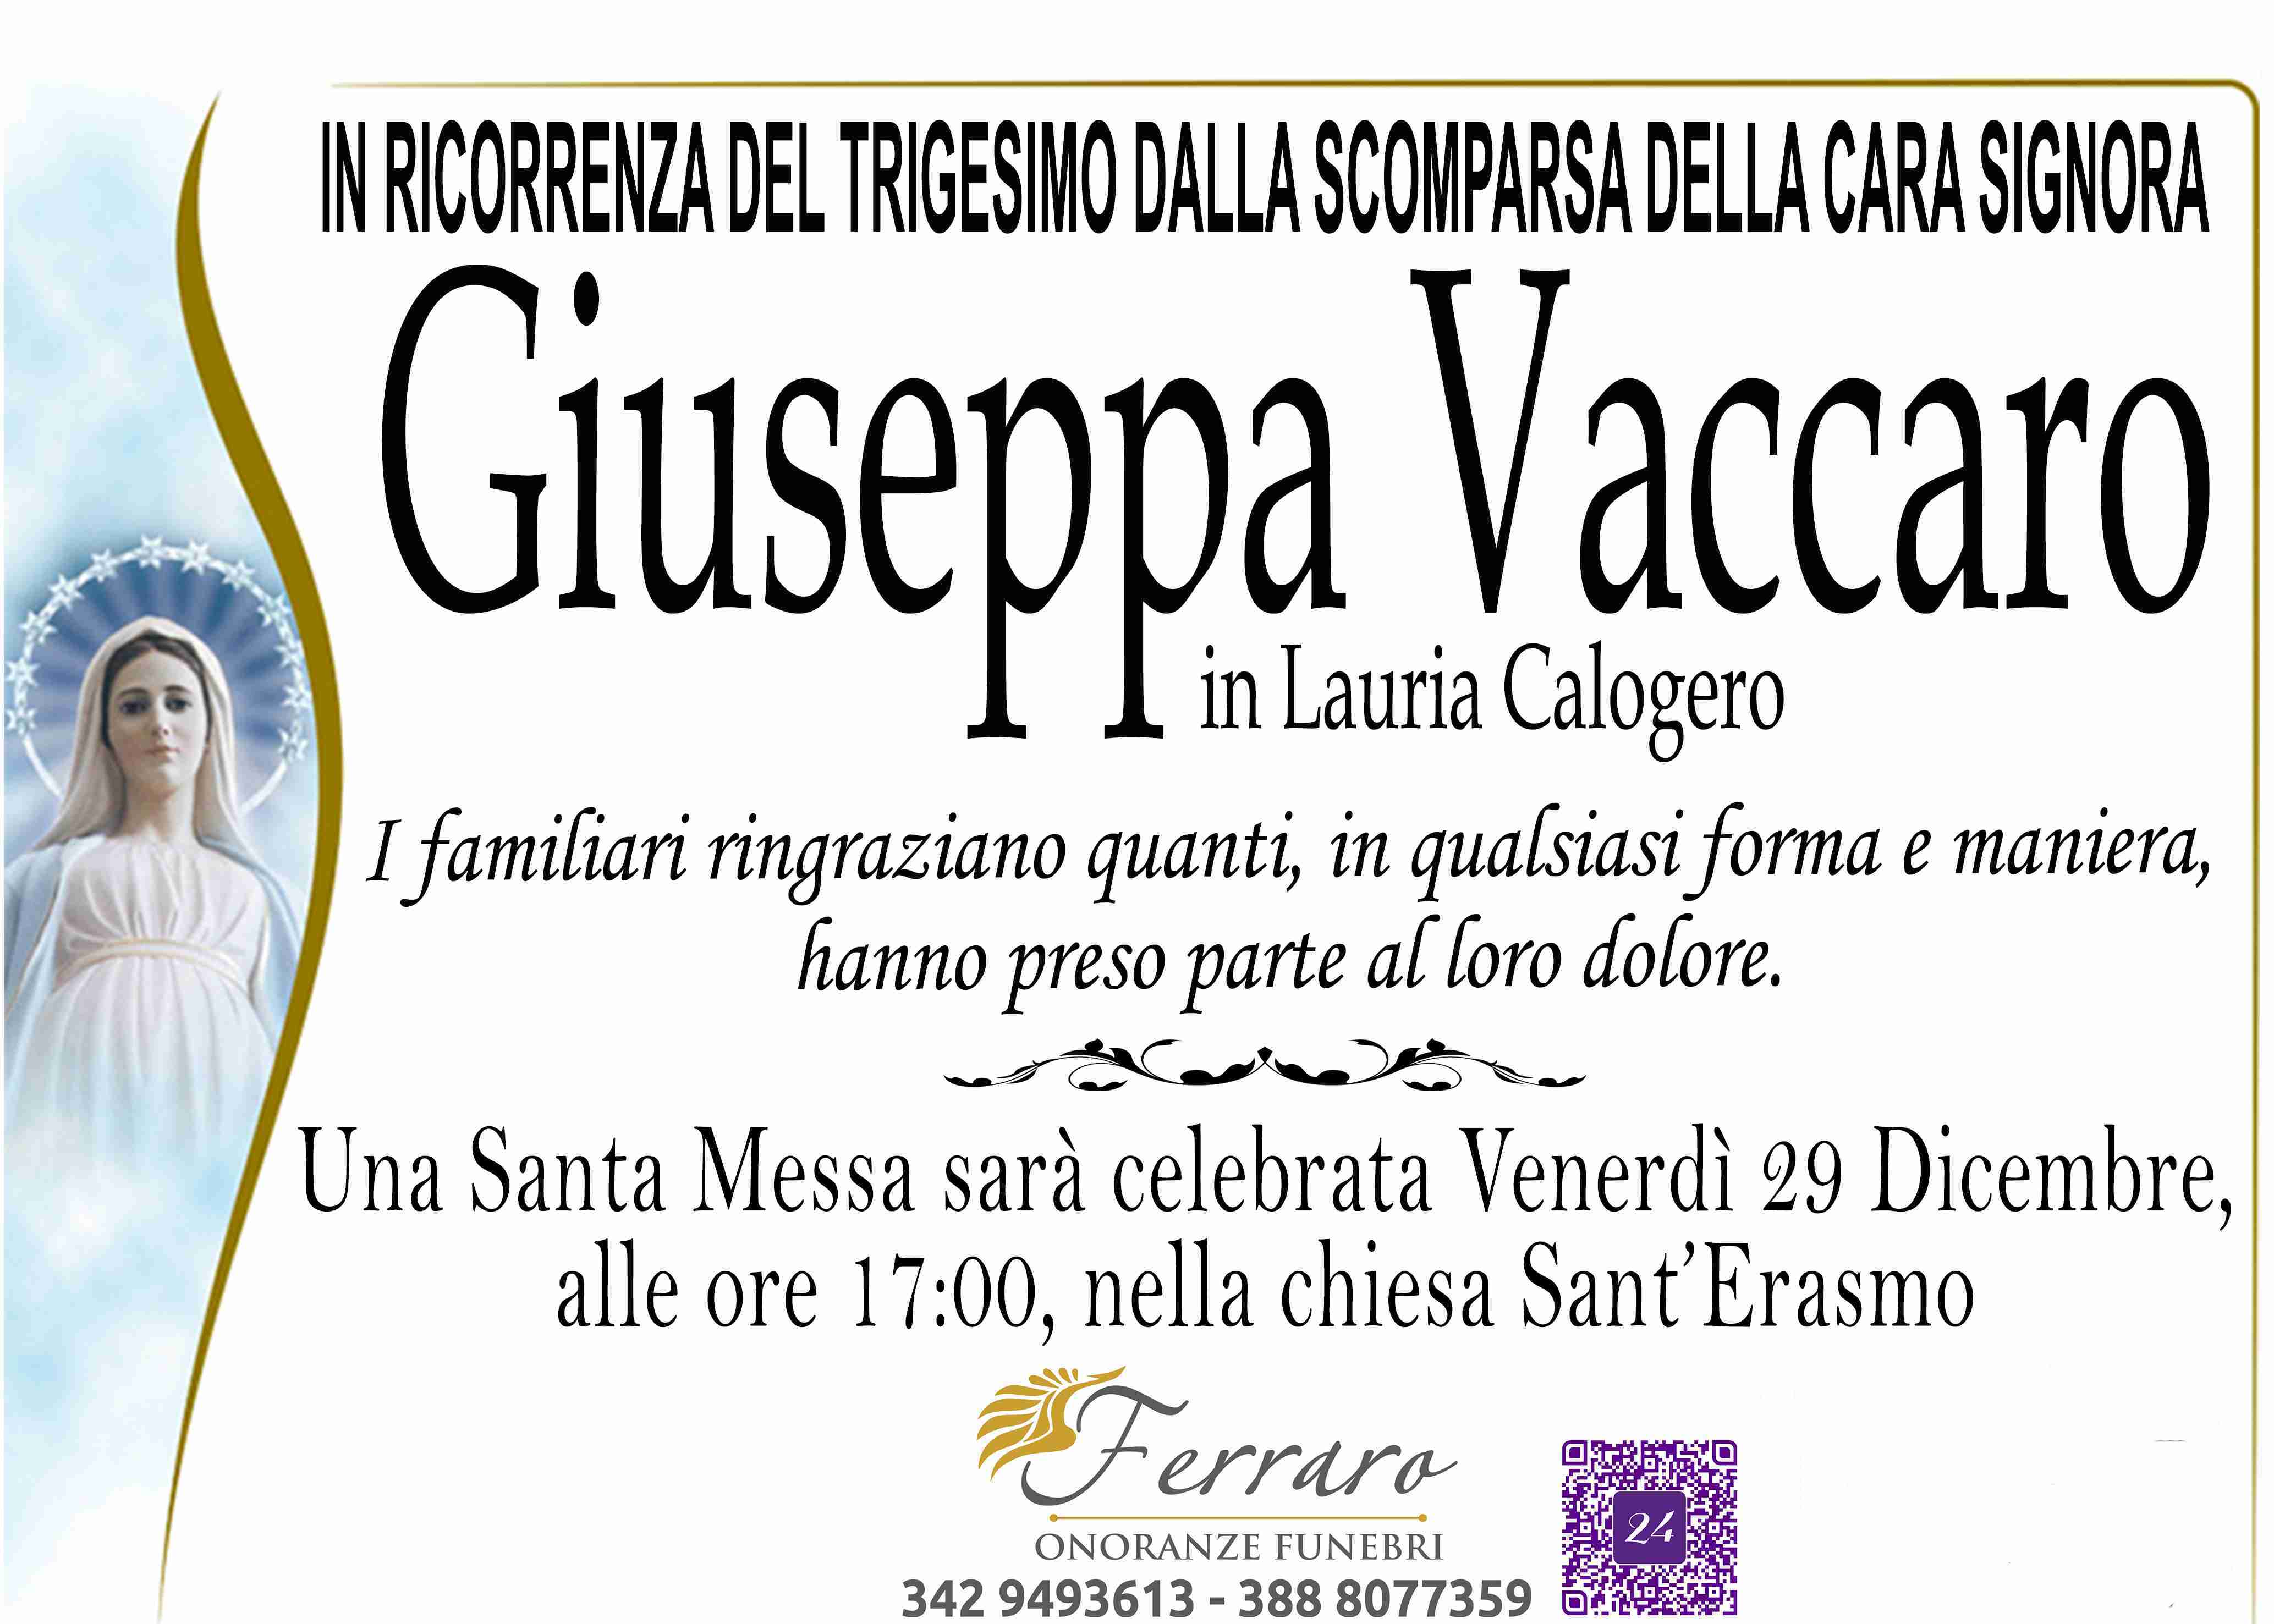 Giuseppa Vaccaro